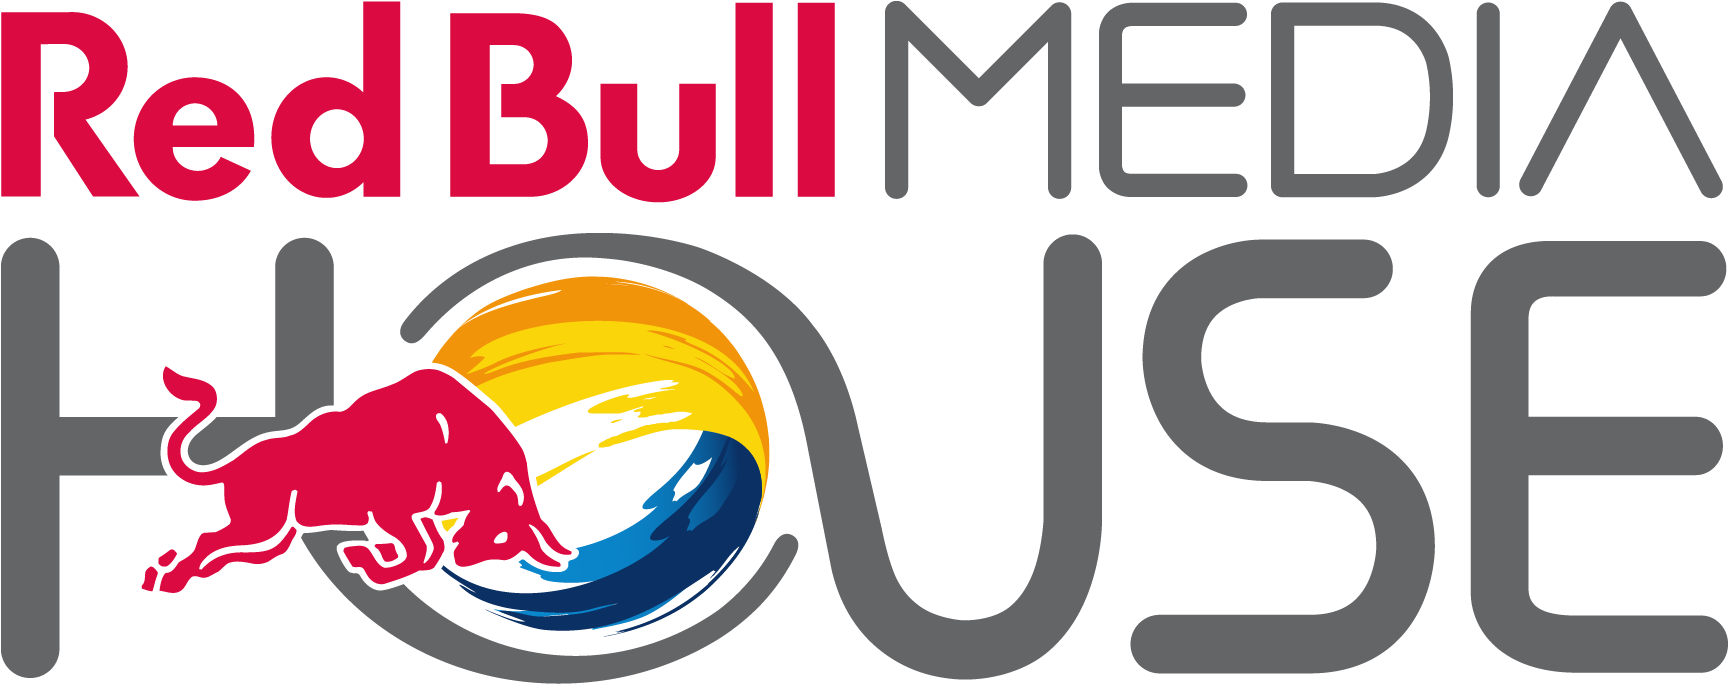 Contact - Red Bull Media Logo (1845x801)